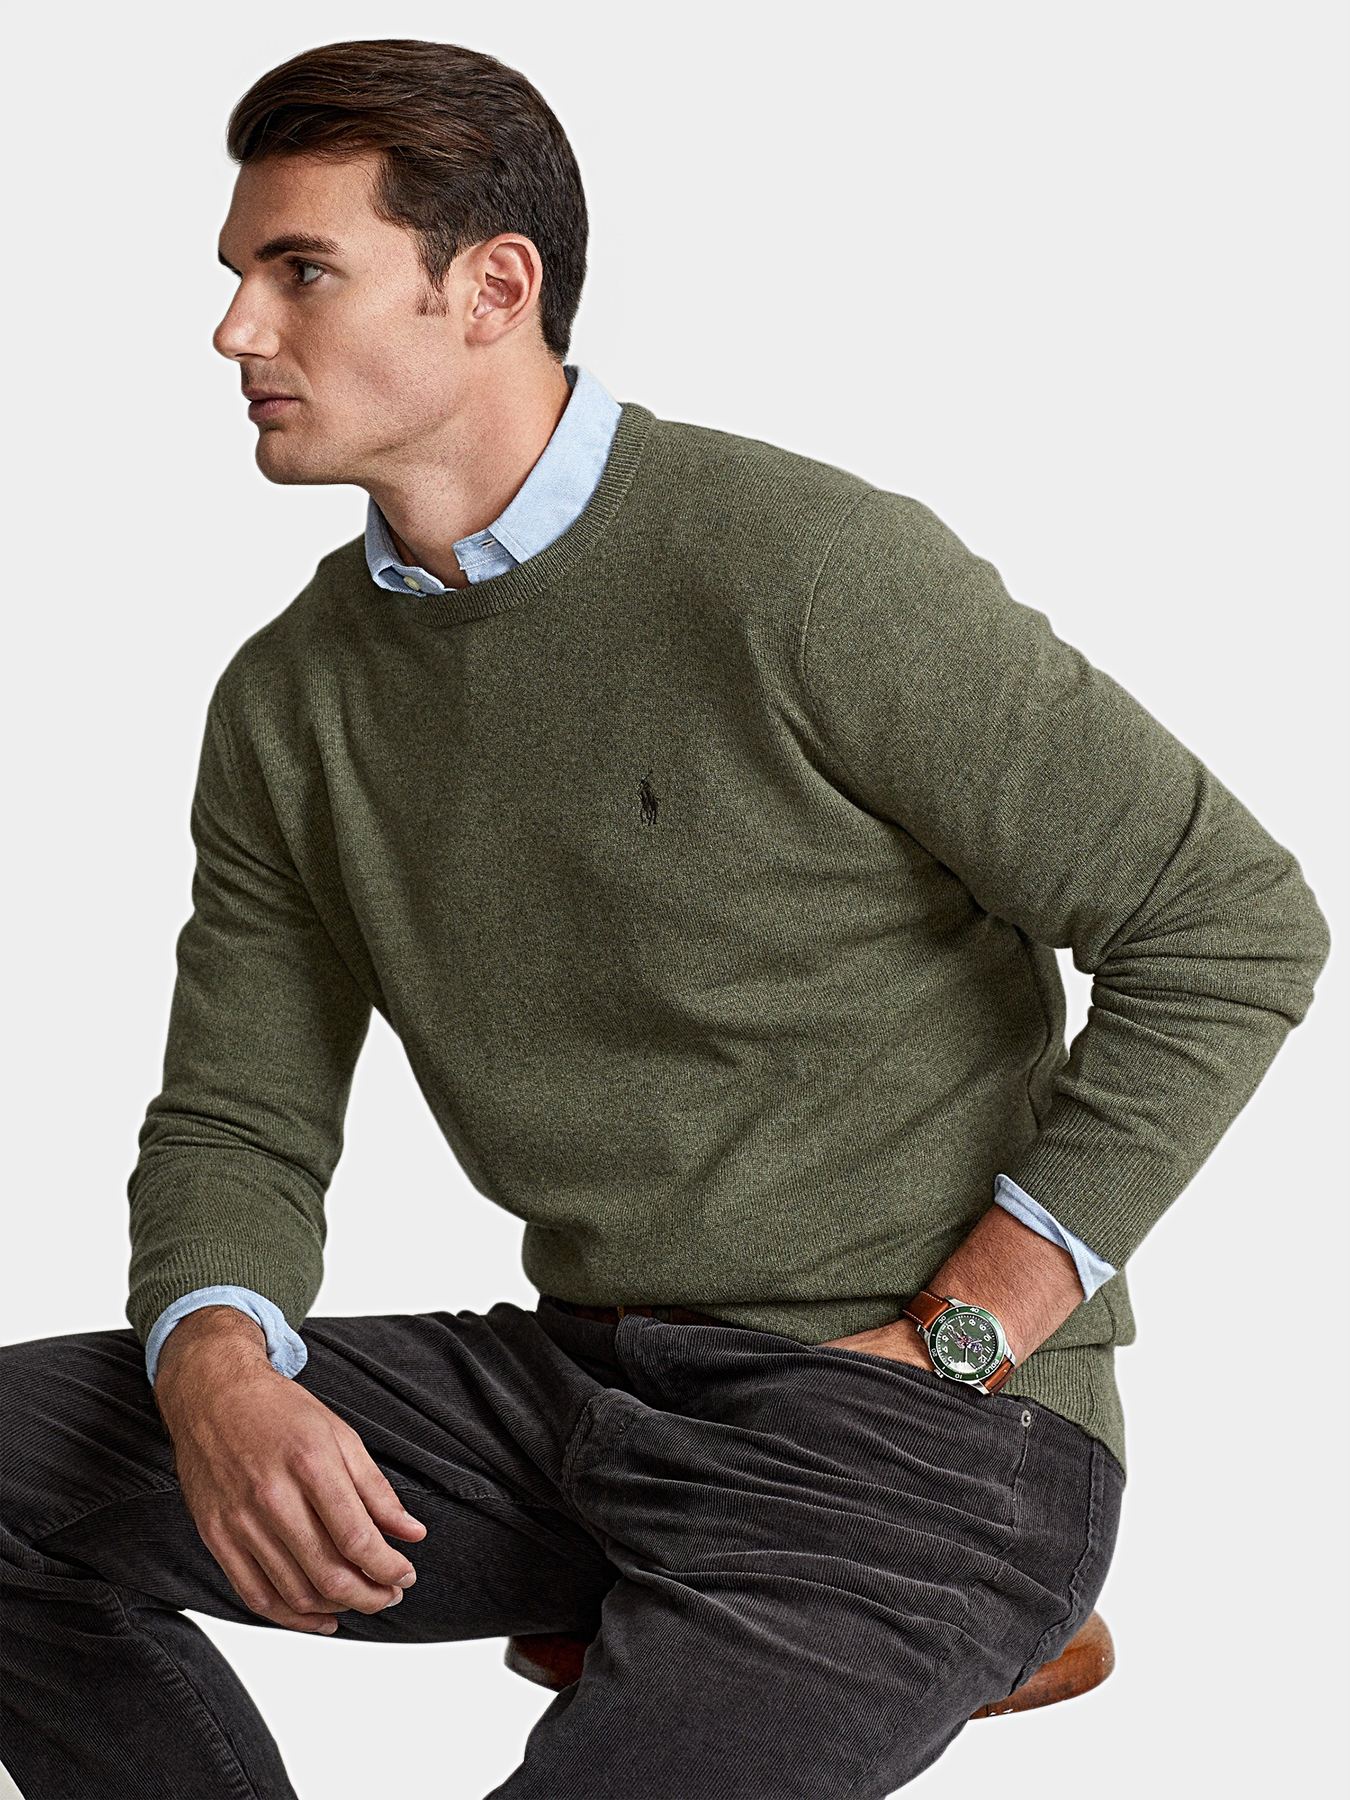 Merino wool sweater in green color brand POLO RALPH LAUREN —  /en